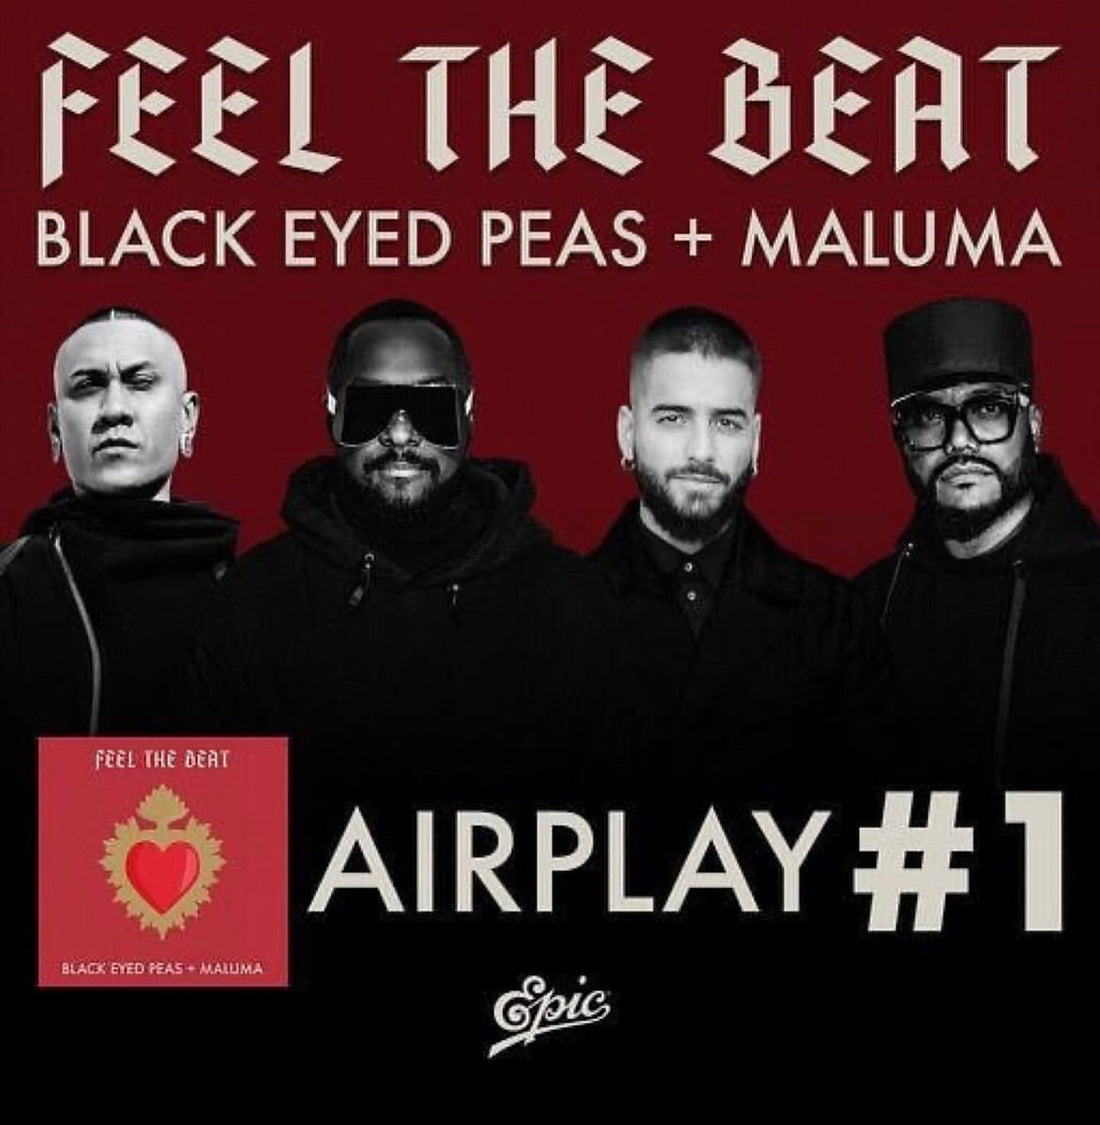 'FEEL THE BEAT' by Black Eyed Peas feat. Maluma